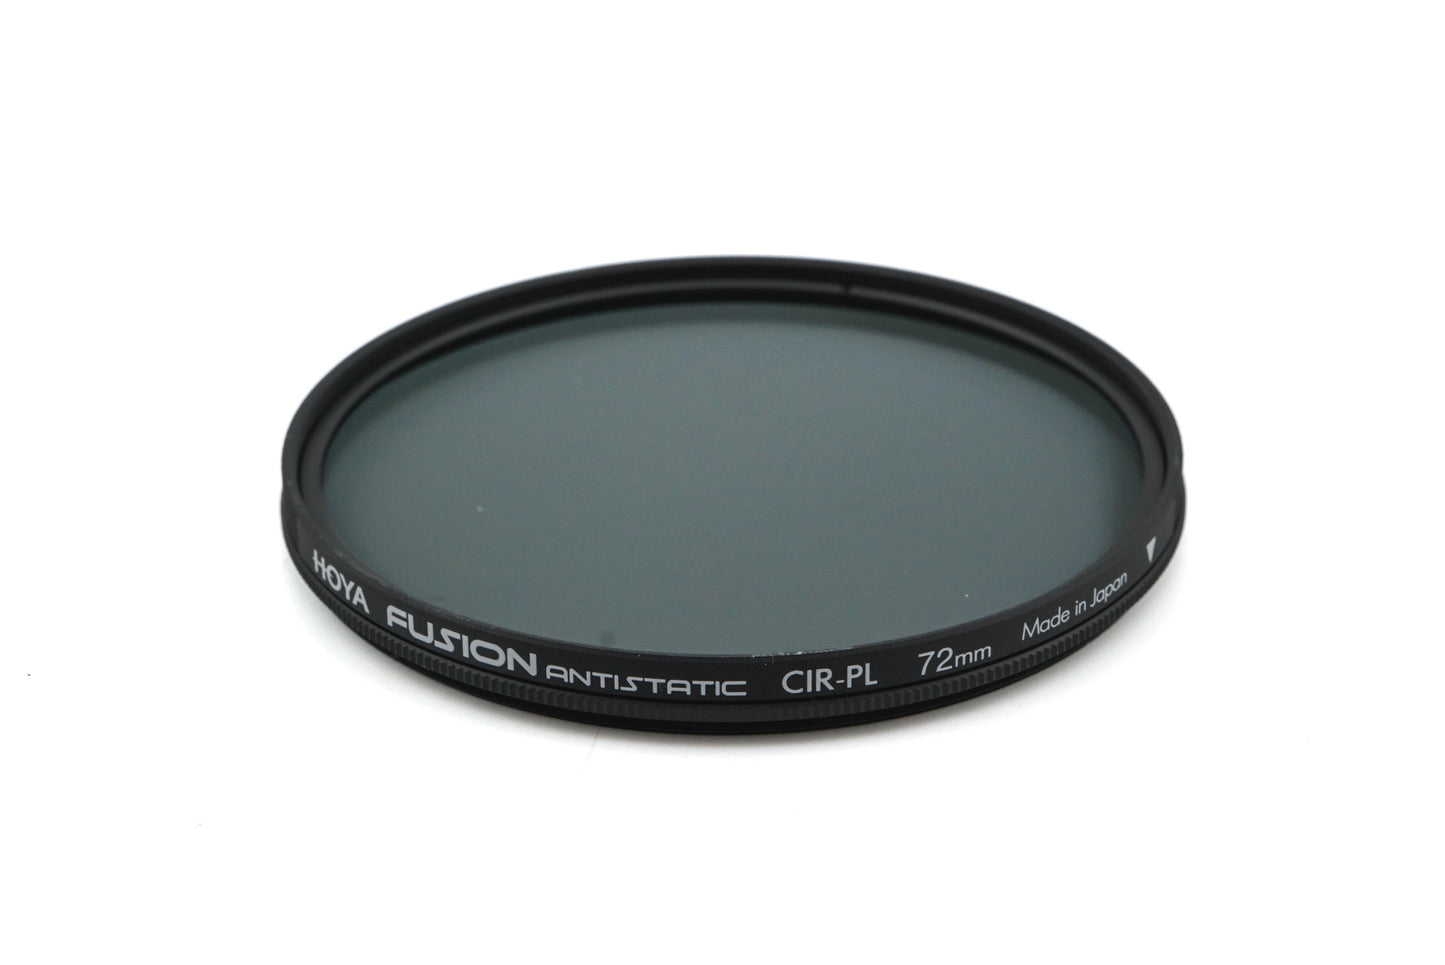 Hoya 72mm Circular Polarizing Filter Fusion Antistatic CIR-PL - Accessory